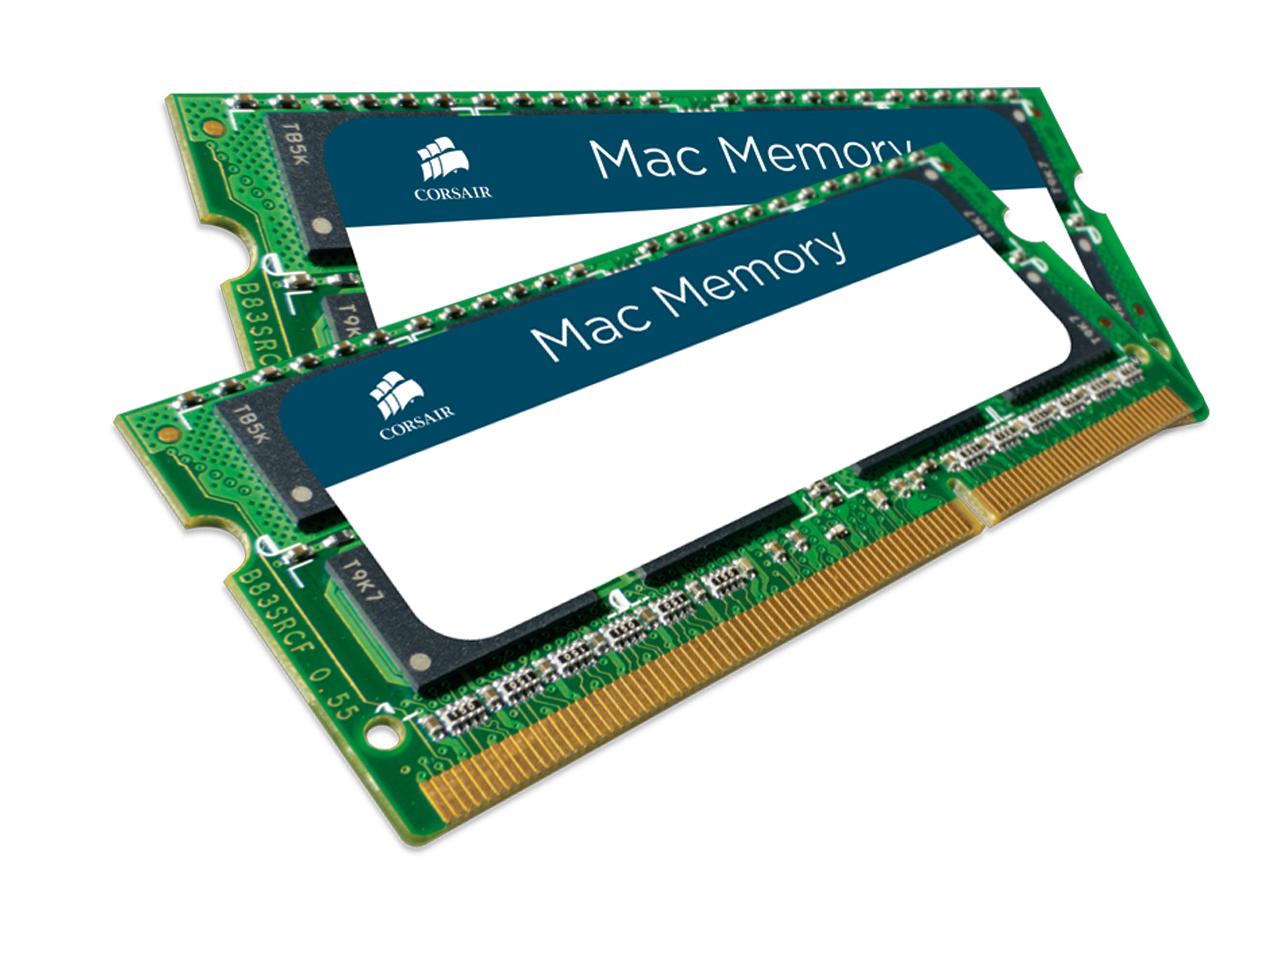 Corsair Mac Memory 8GB 1,333MHz DDR3 SDRAM SO DIMM 204-pin